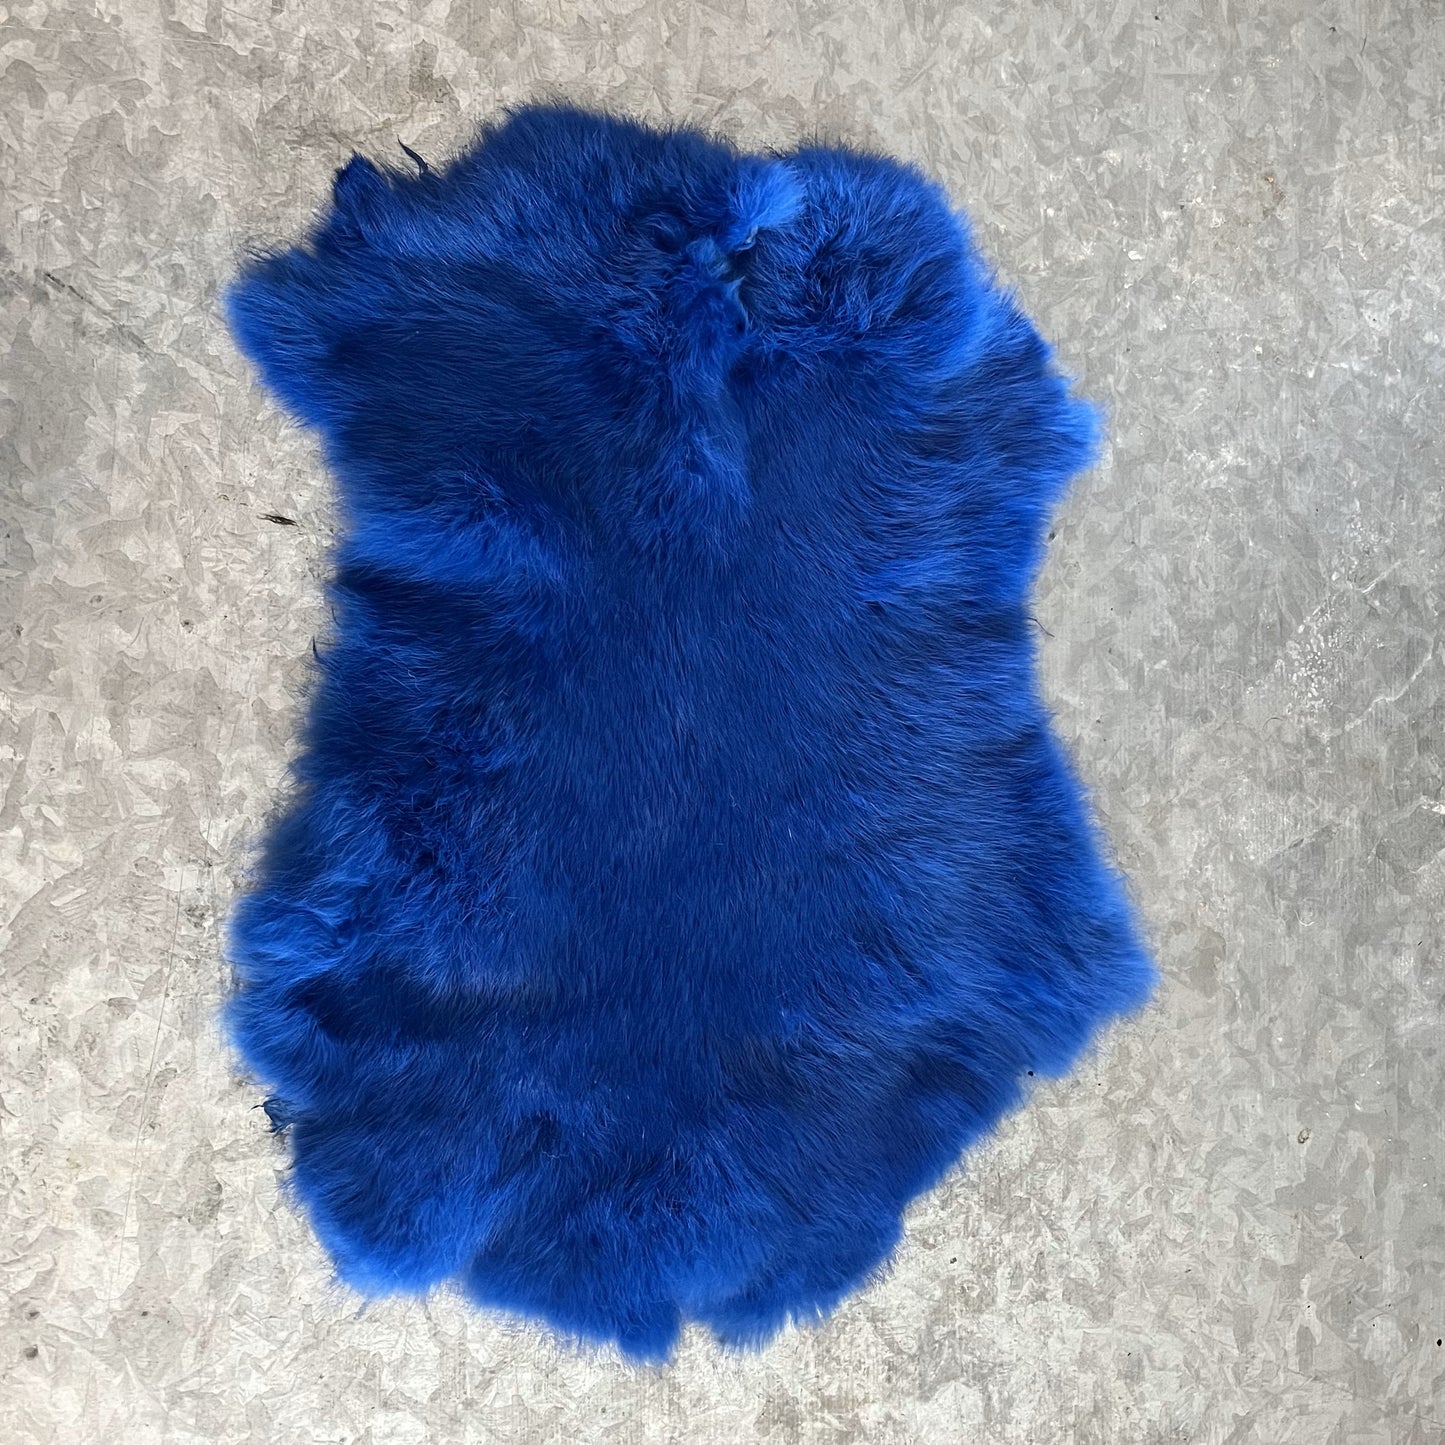 Rabbit Fur - Dyed Blue